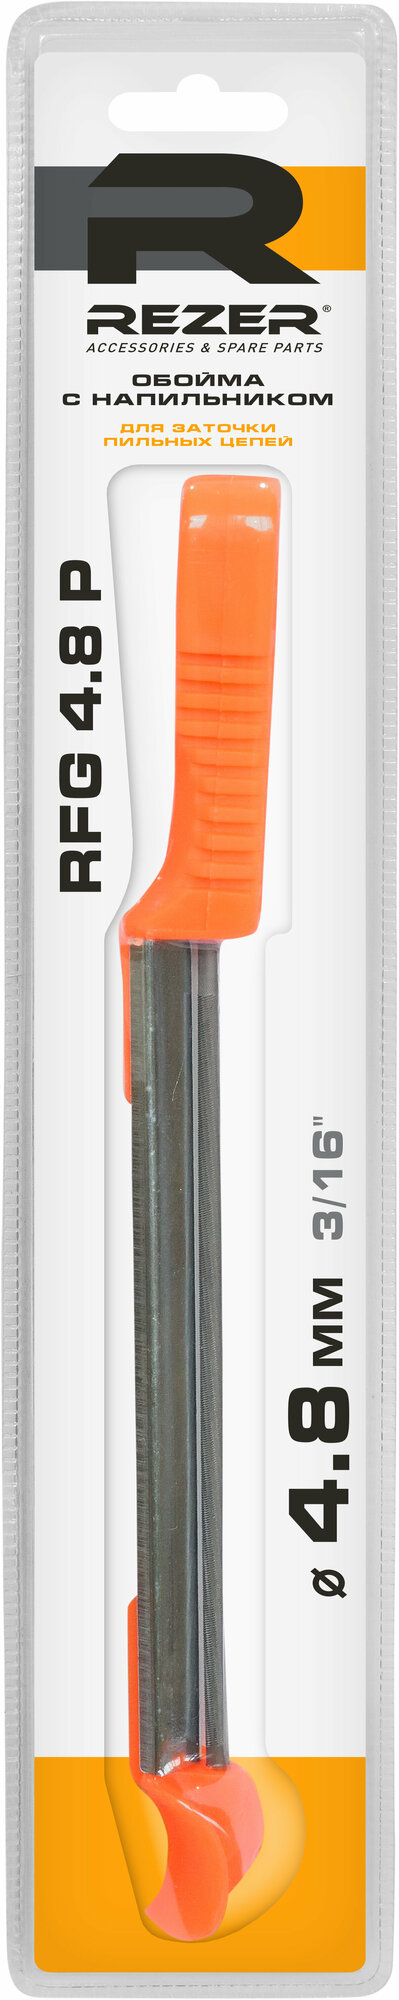 Напильник и обойма Rezer RFG 4.8 P Без бренда - фото №15